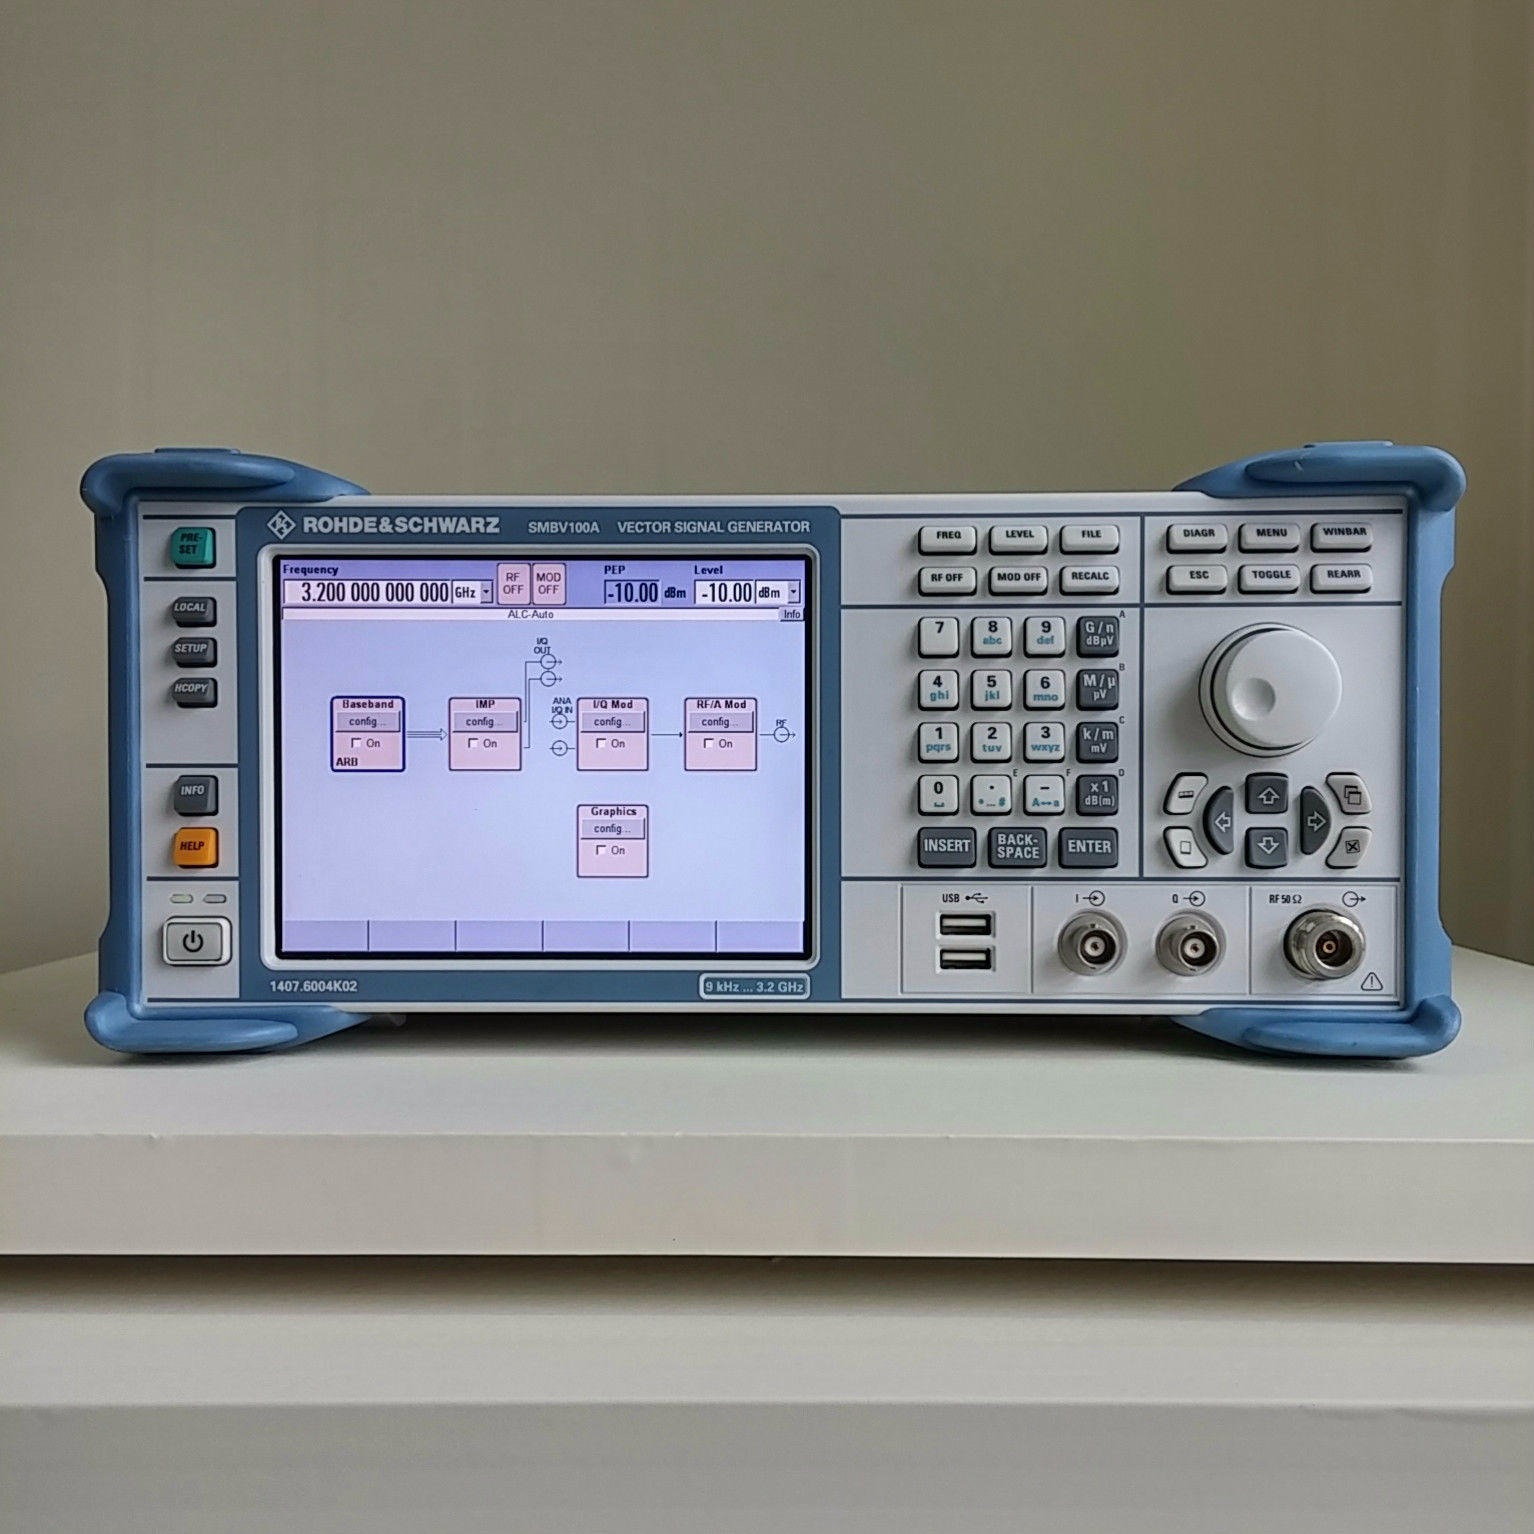 RS/罗德与施瓦茨 SMATE200A信号发生器 矢量信号发生器 质量保证